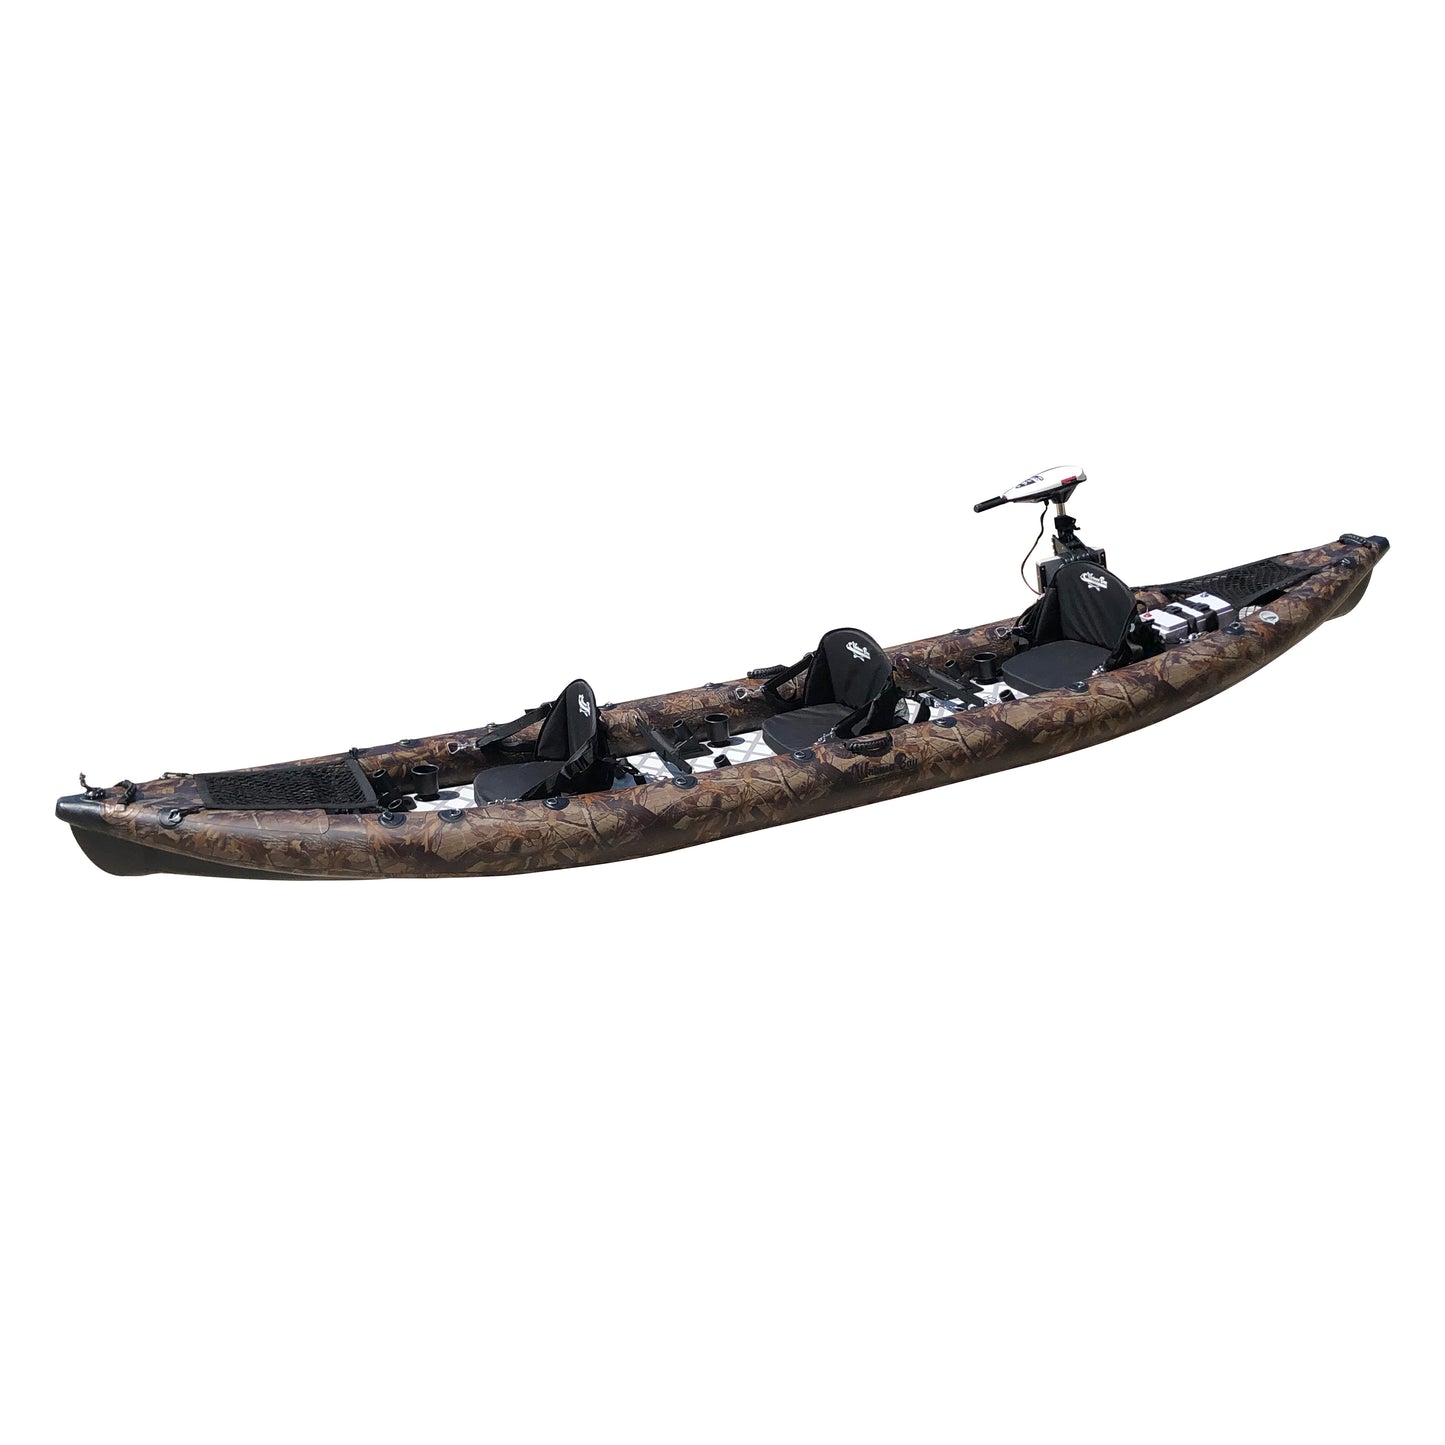 Drifter Inflatable Kayak